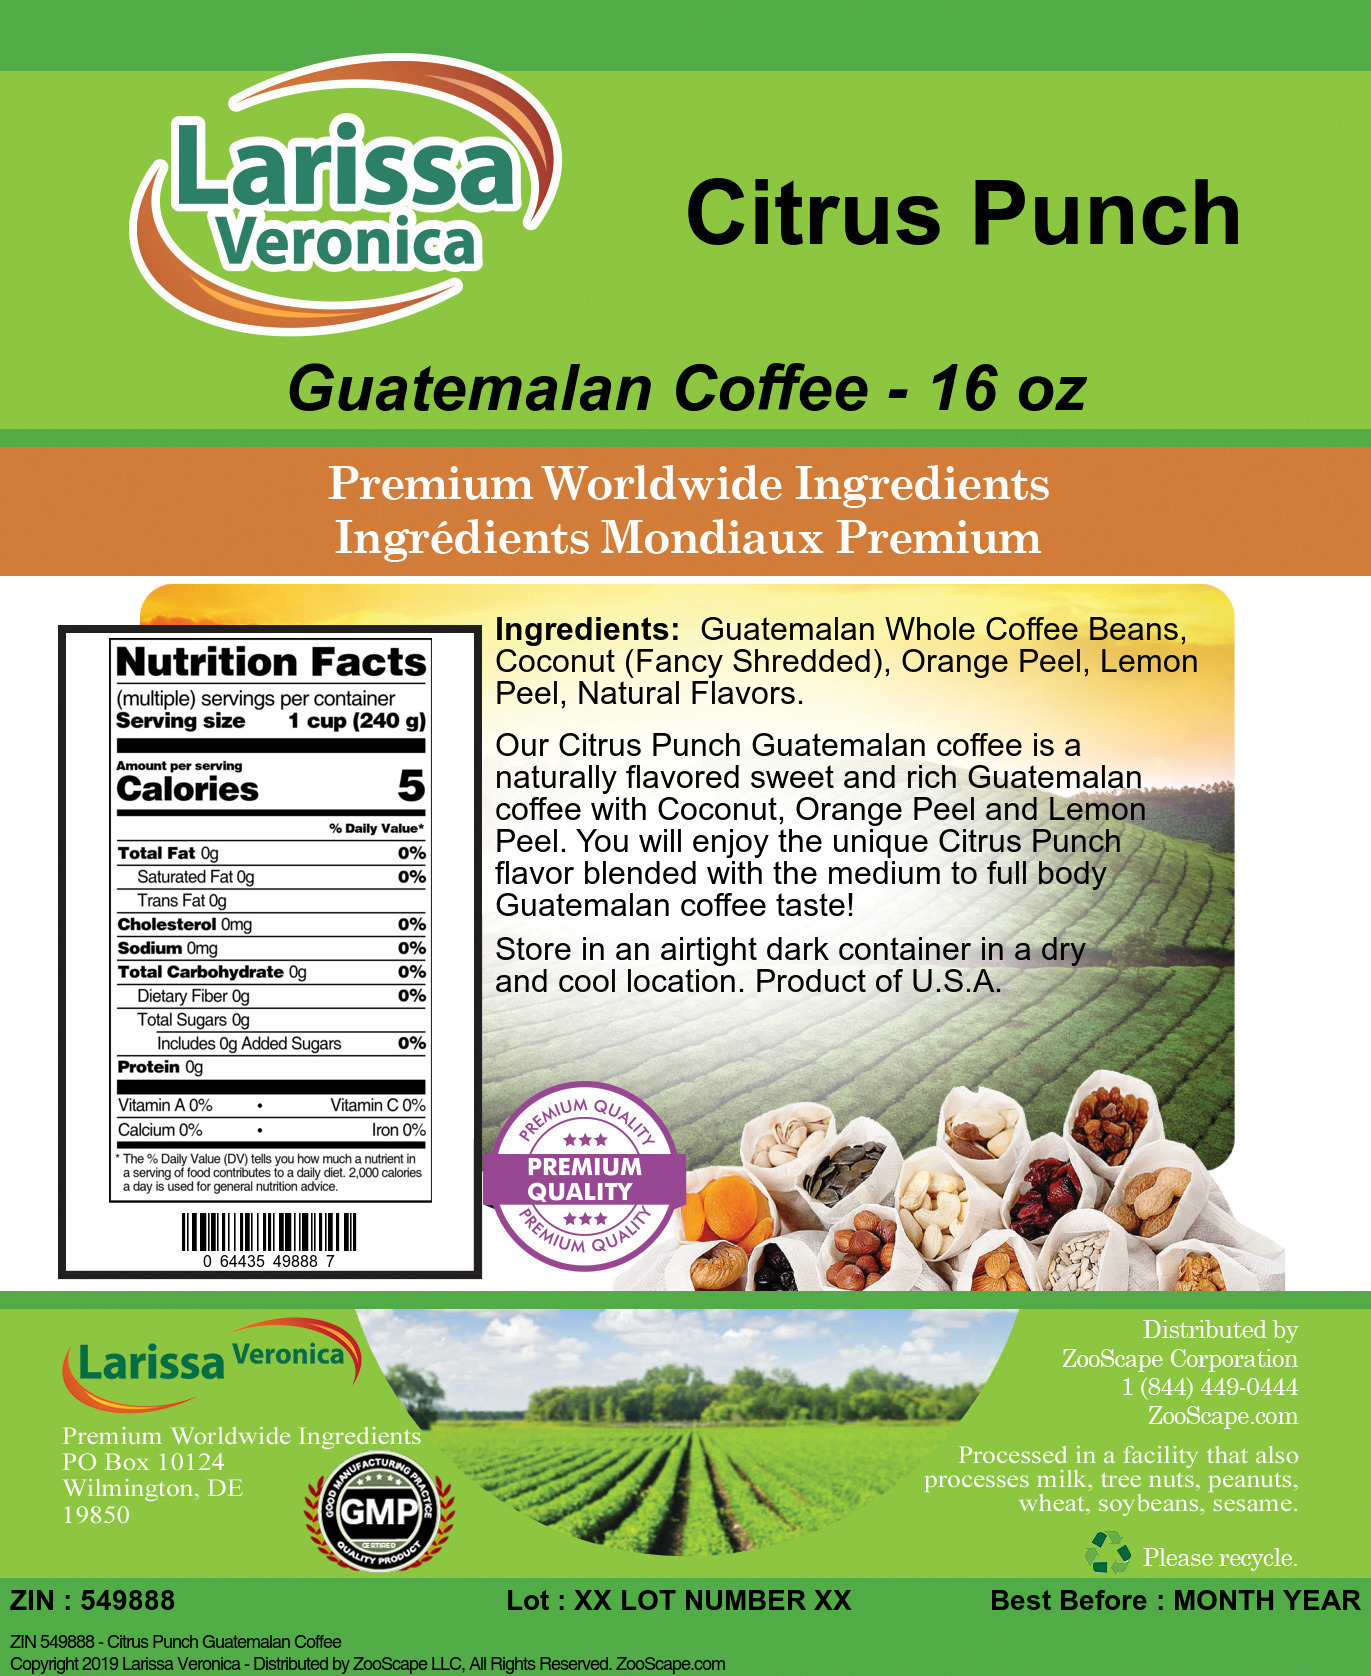 Citrus Punch Guatemalan Coffee - Label